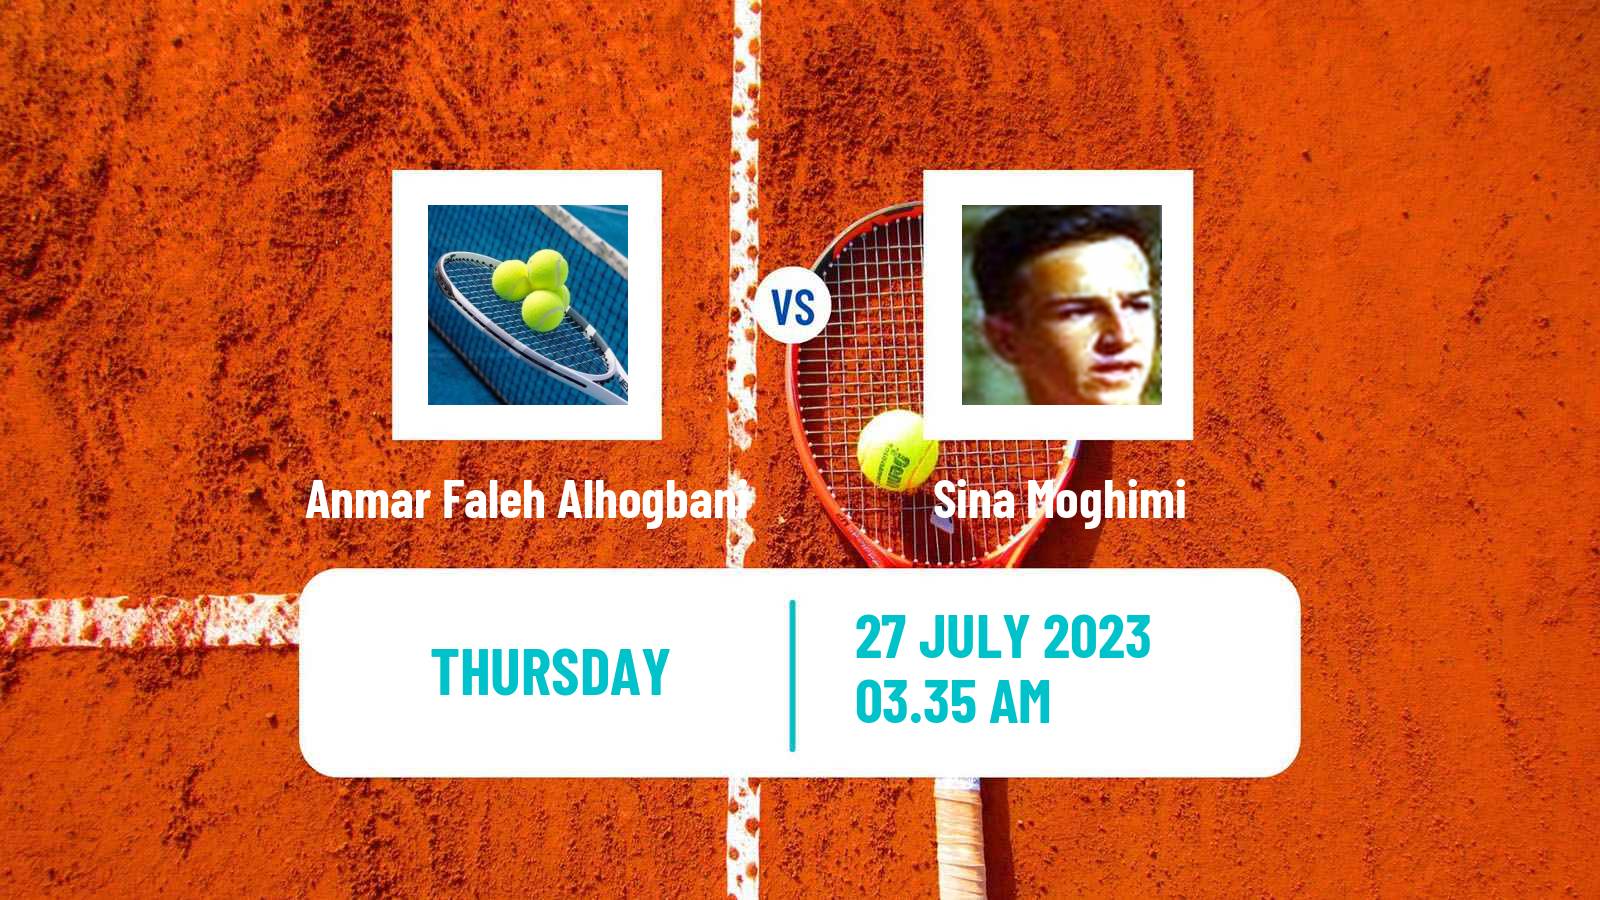 Tennis Davis Cup Group III Anmar Faleh Alhogbani - Sina Moghimi